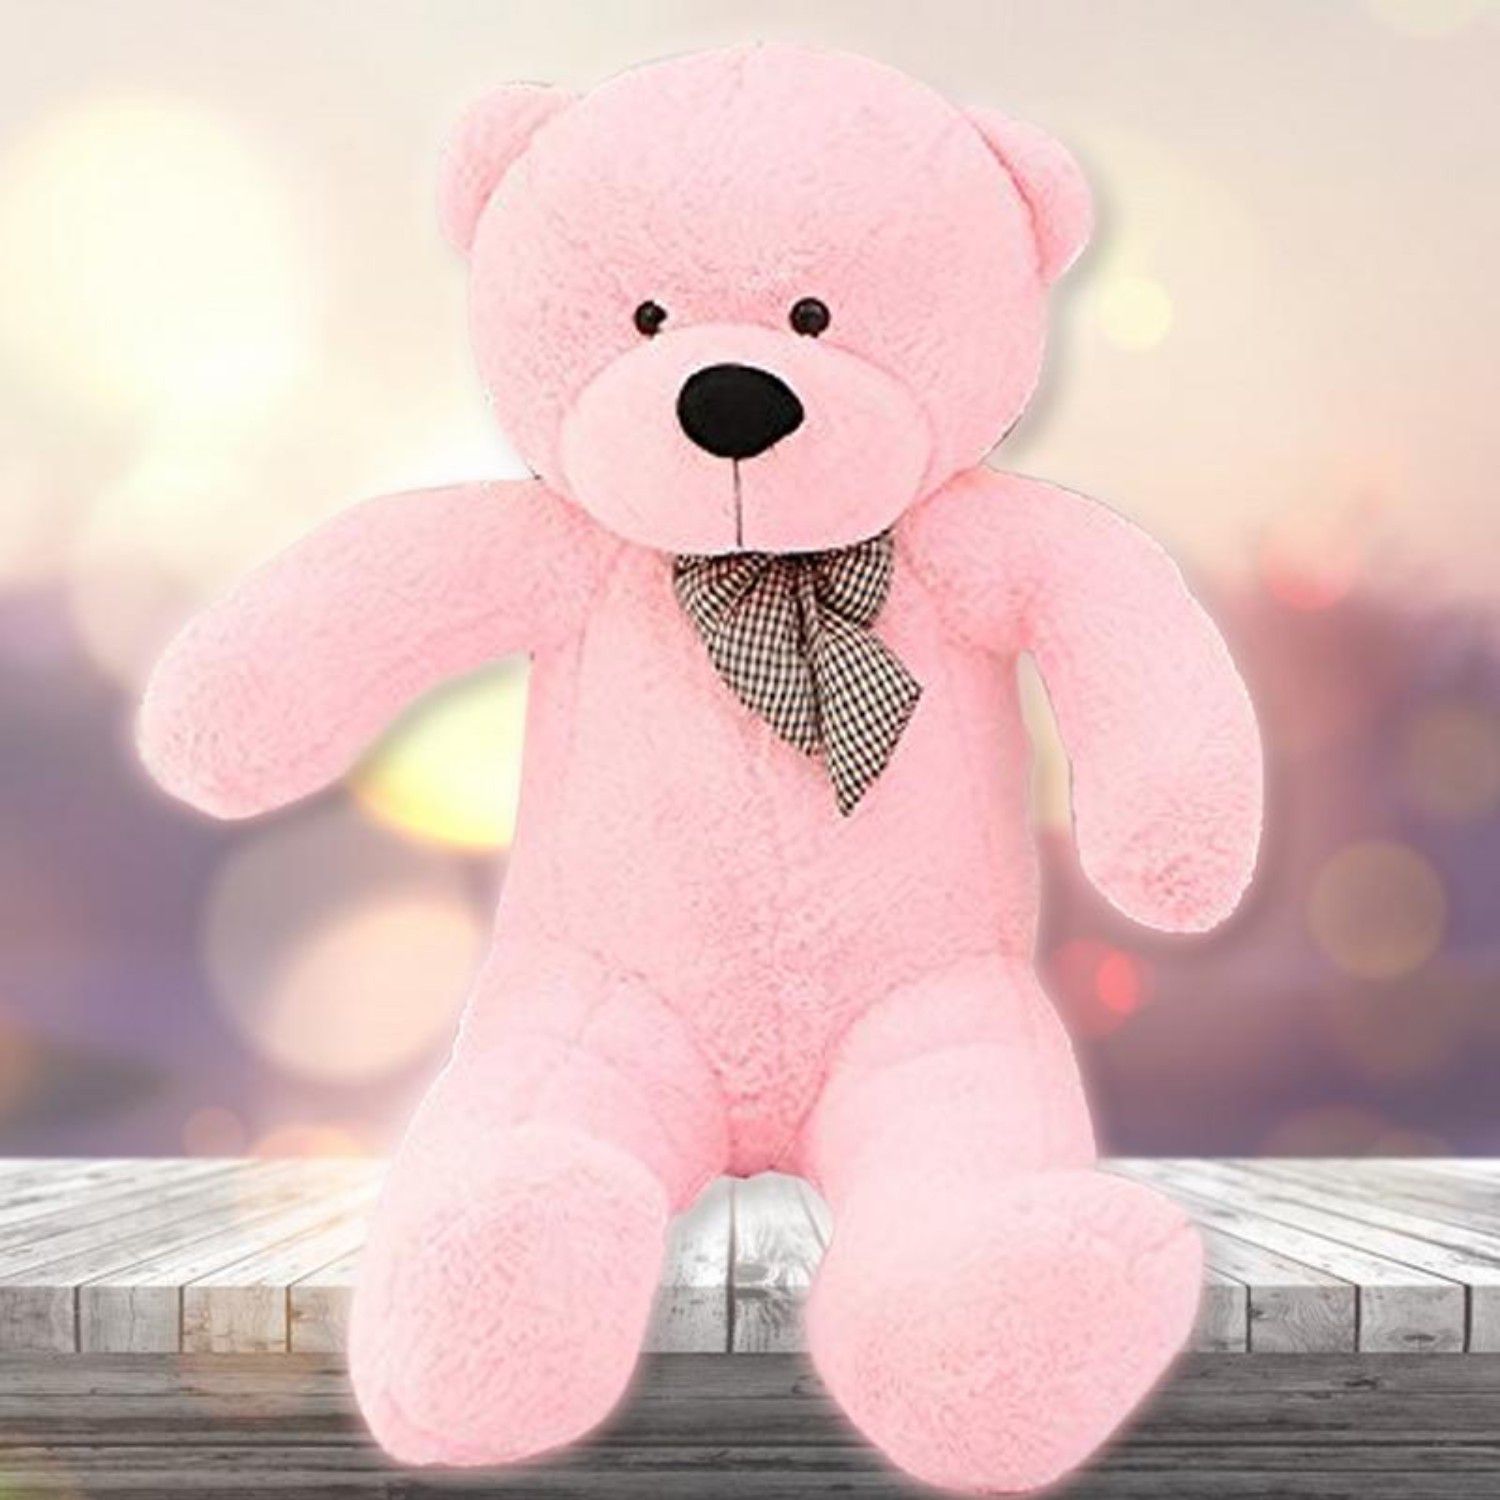 teddy bear 5ft online